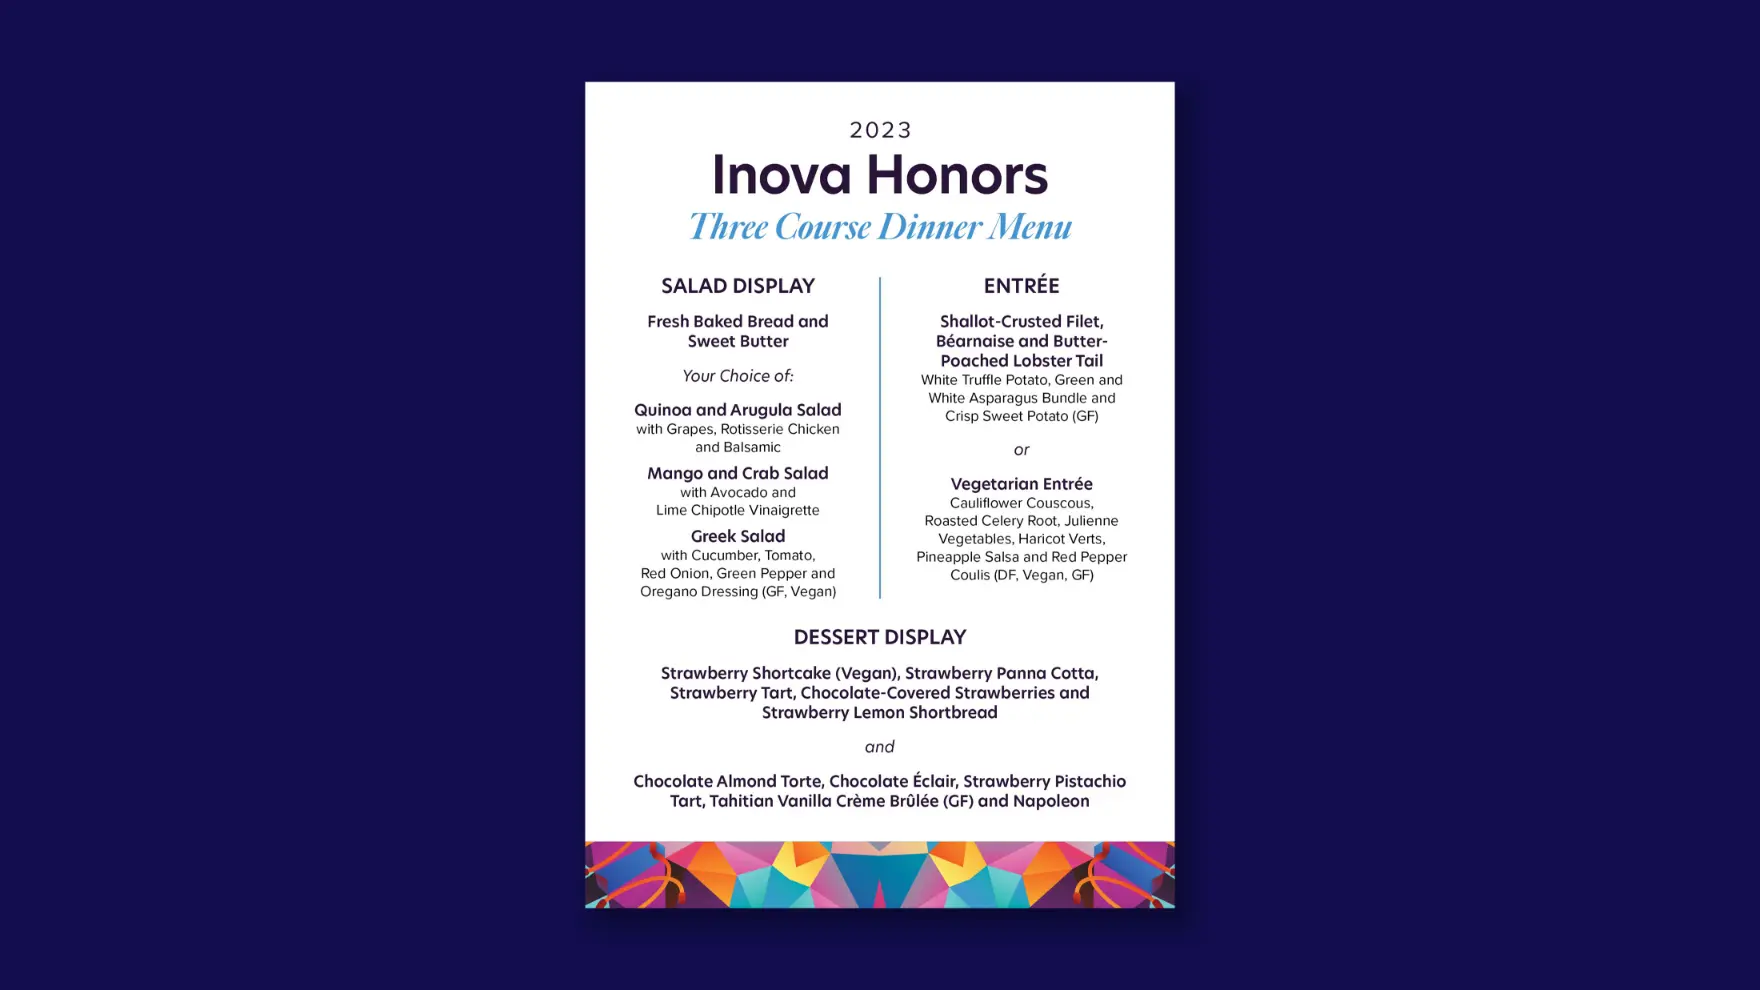 Menu card for the Inova Honors Gala.